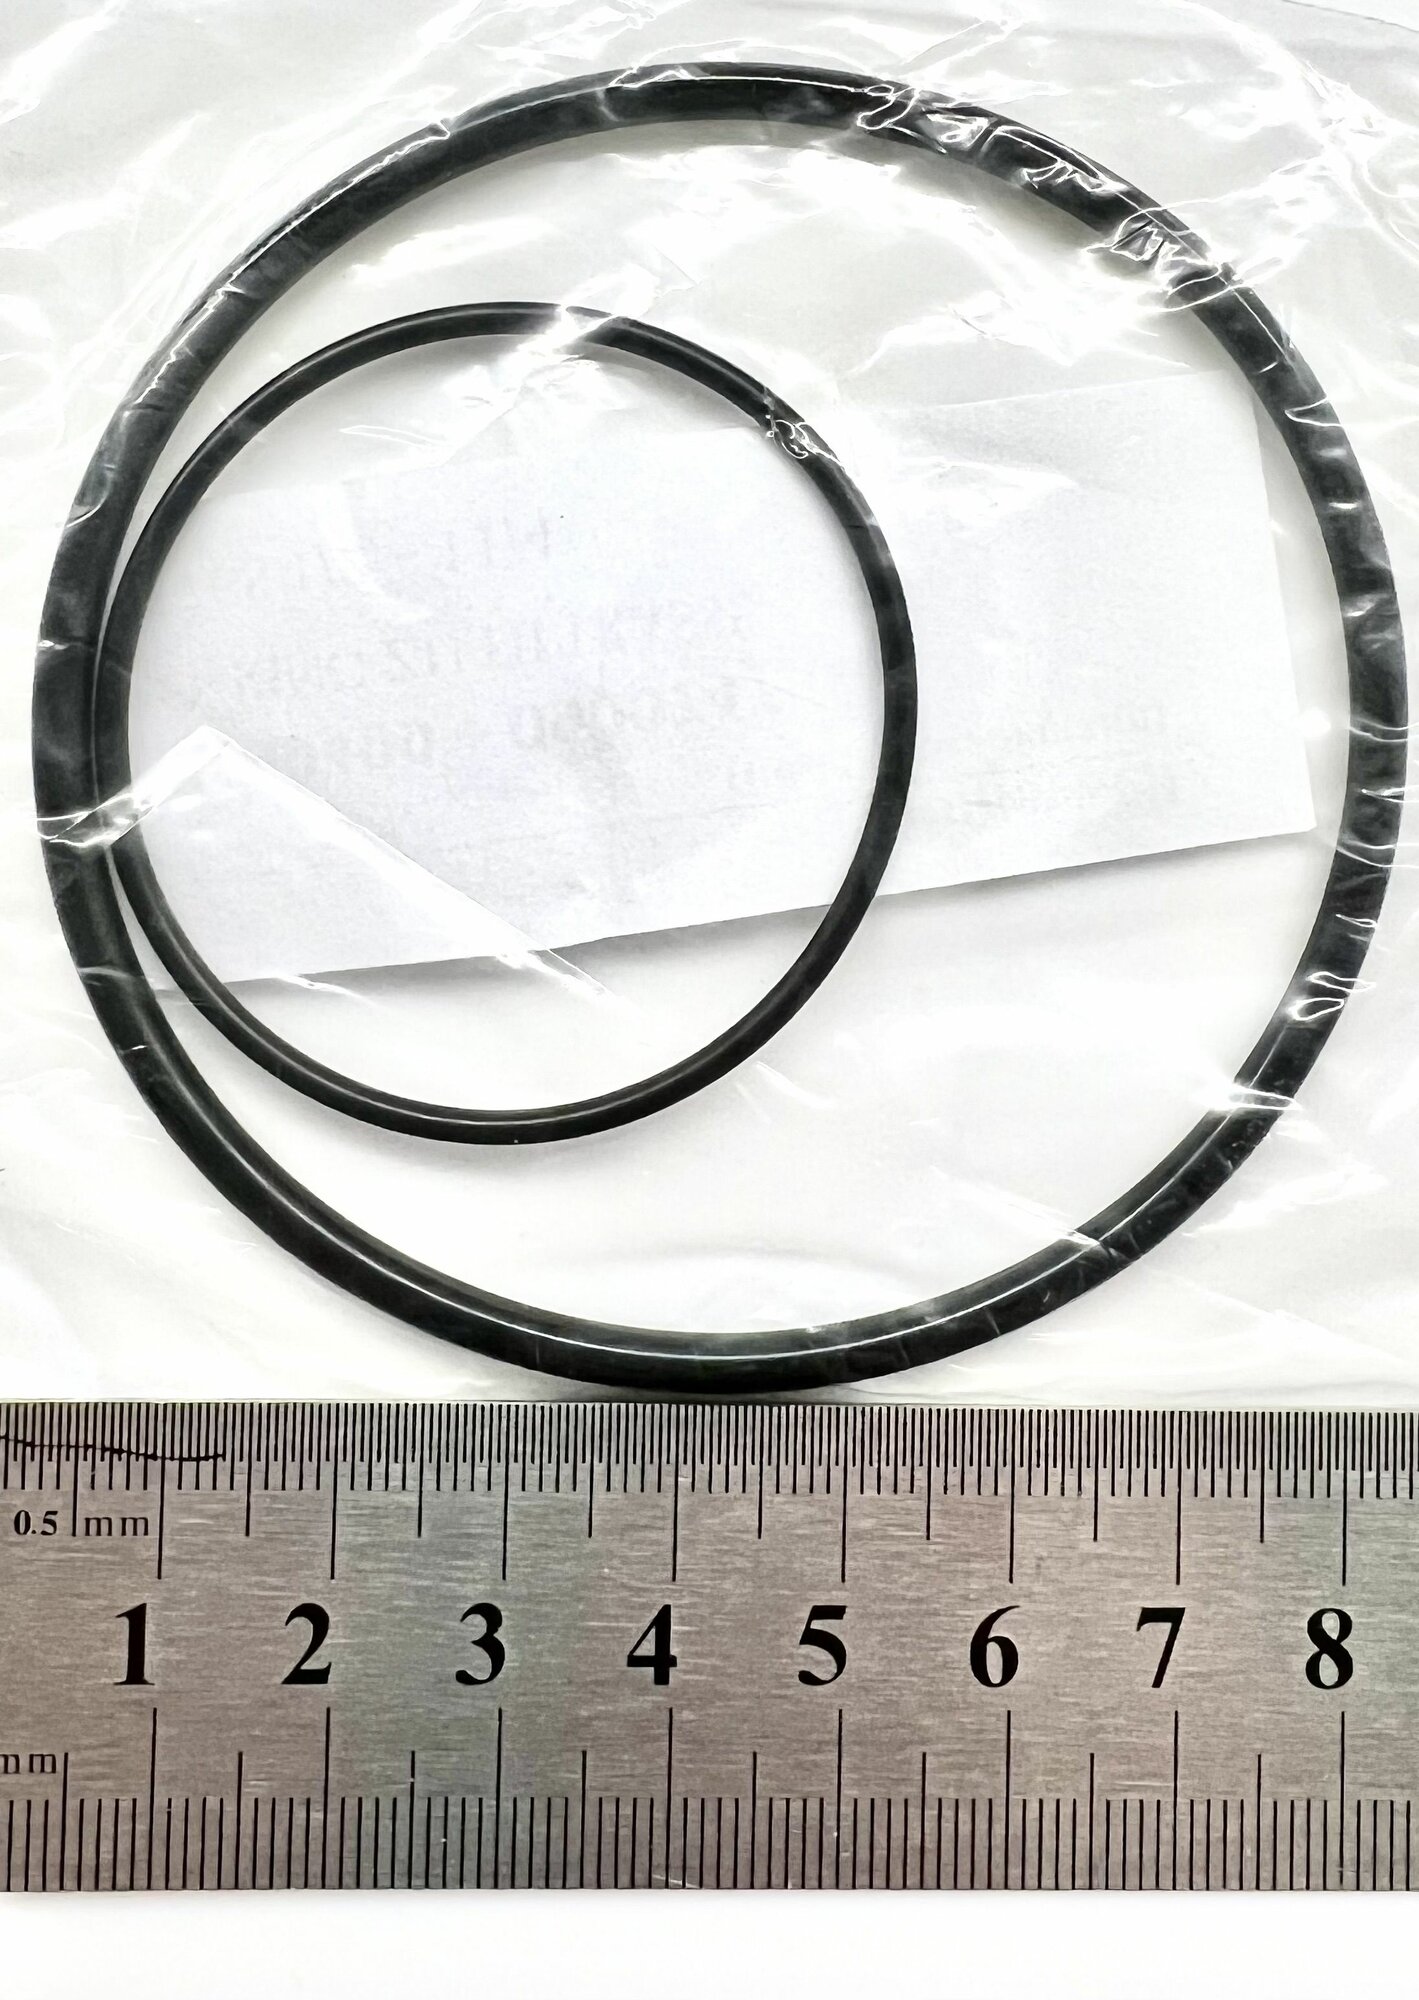 Комплект уплотнительных колец для фильтра Honeywell (Resideo Braukmann) F76S 1/2-1 1/4 арт. 2189400, арт. 0900747 (set)